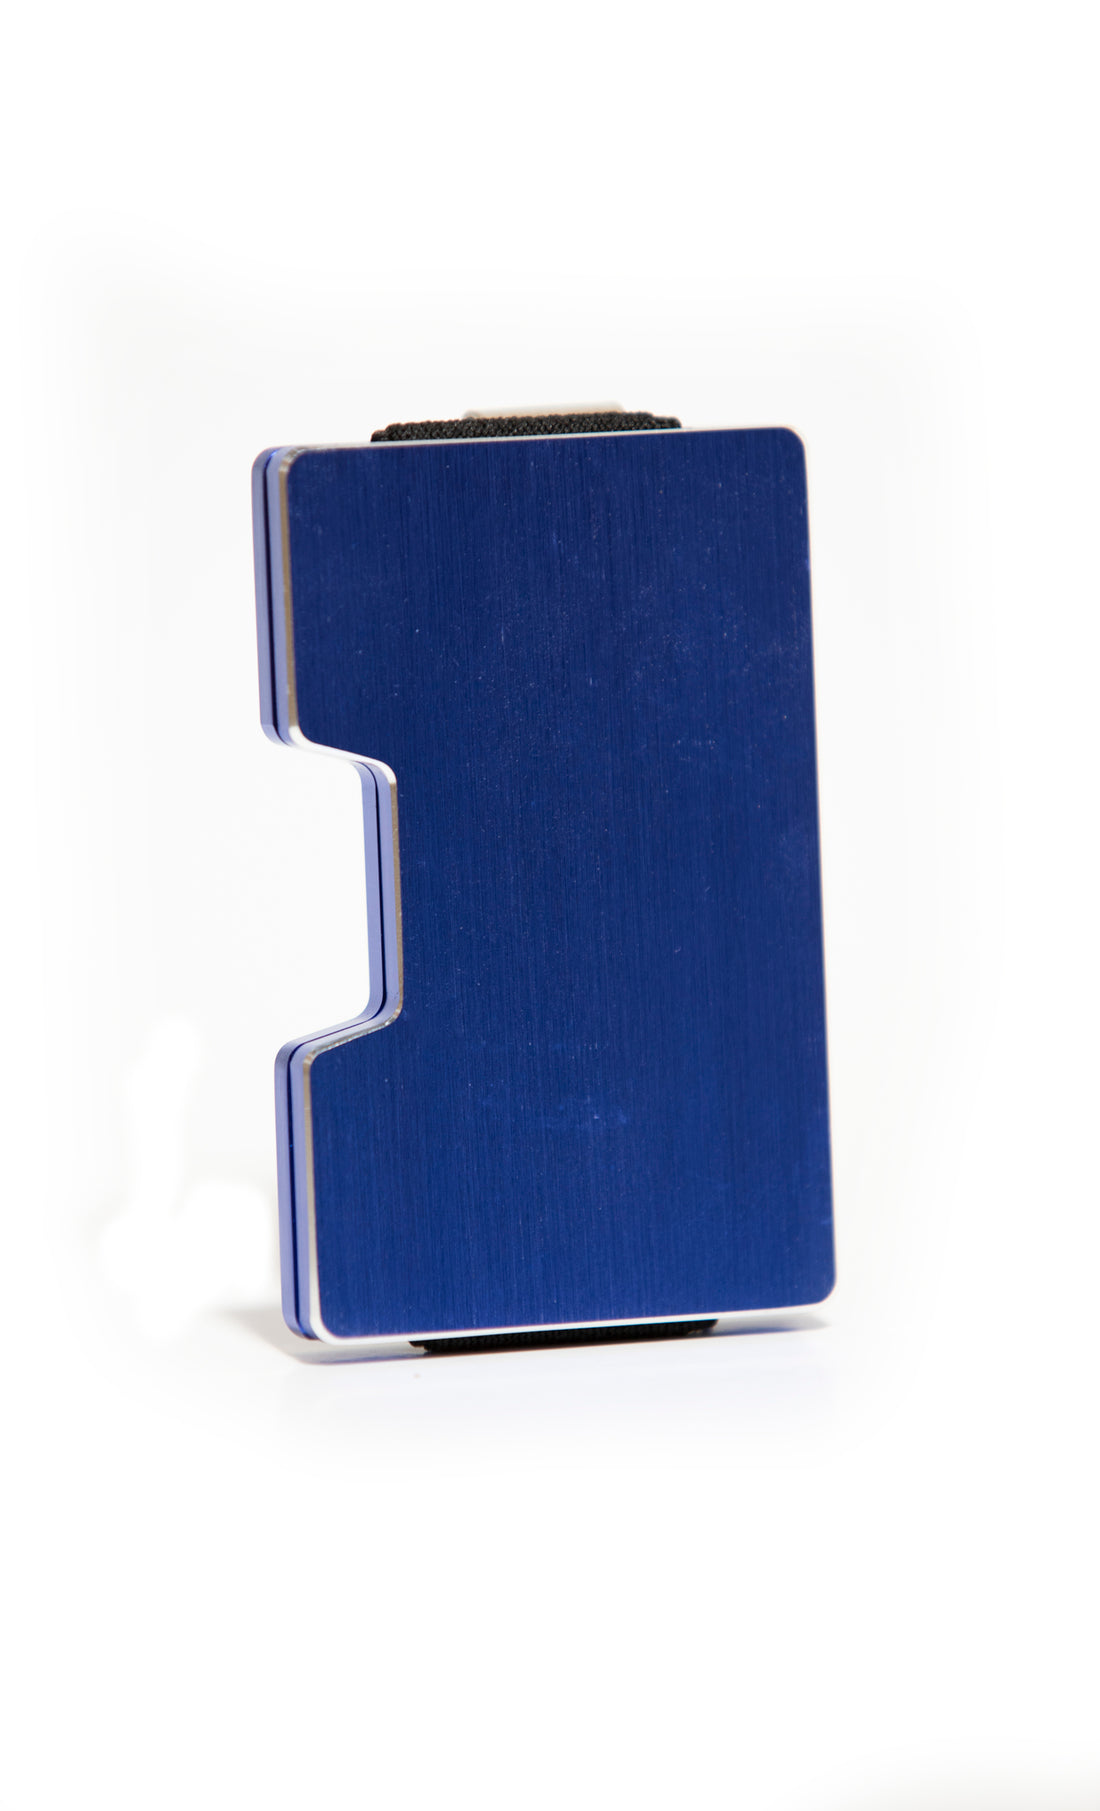 Blue minimalist wallet